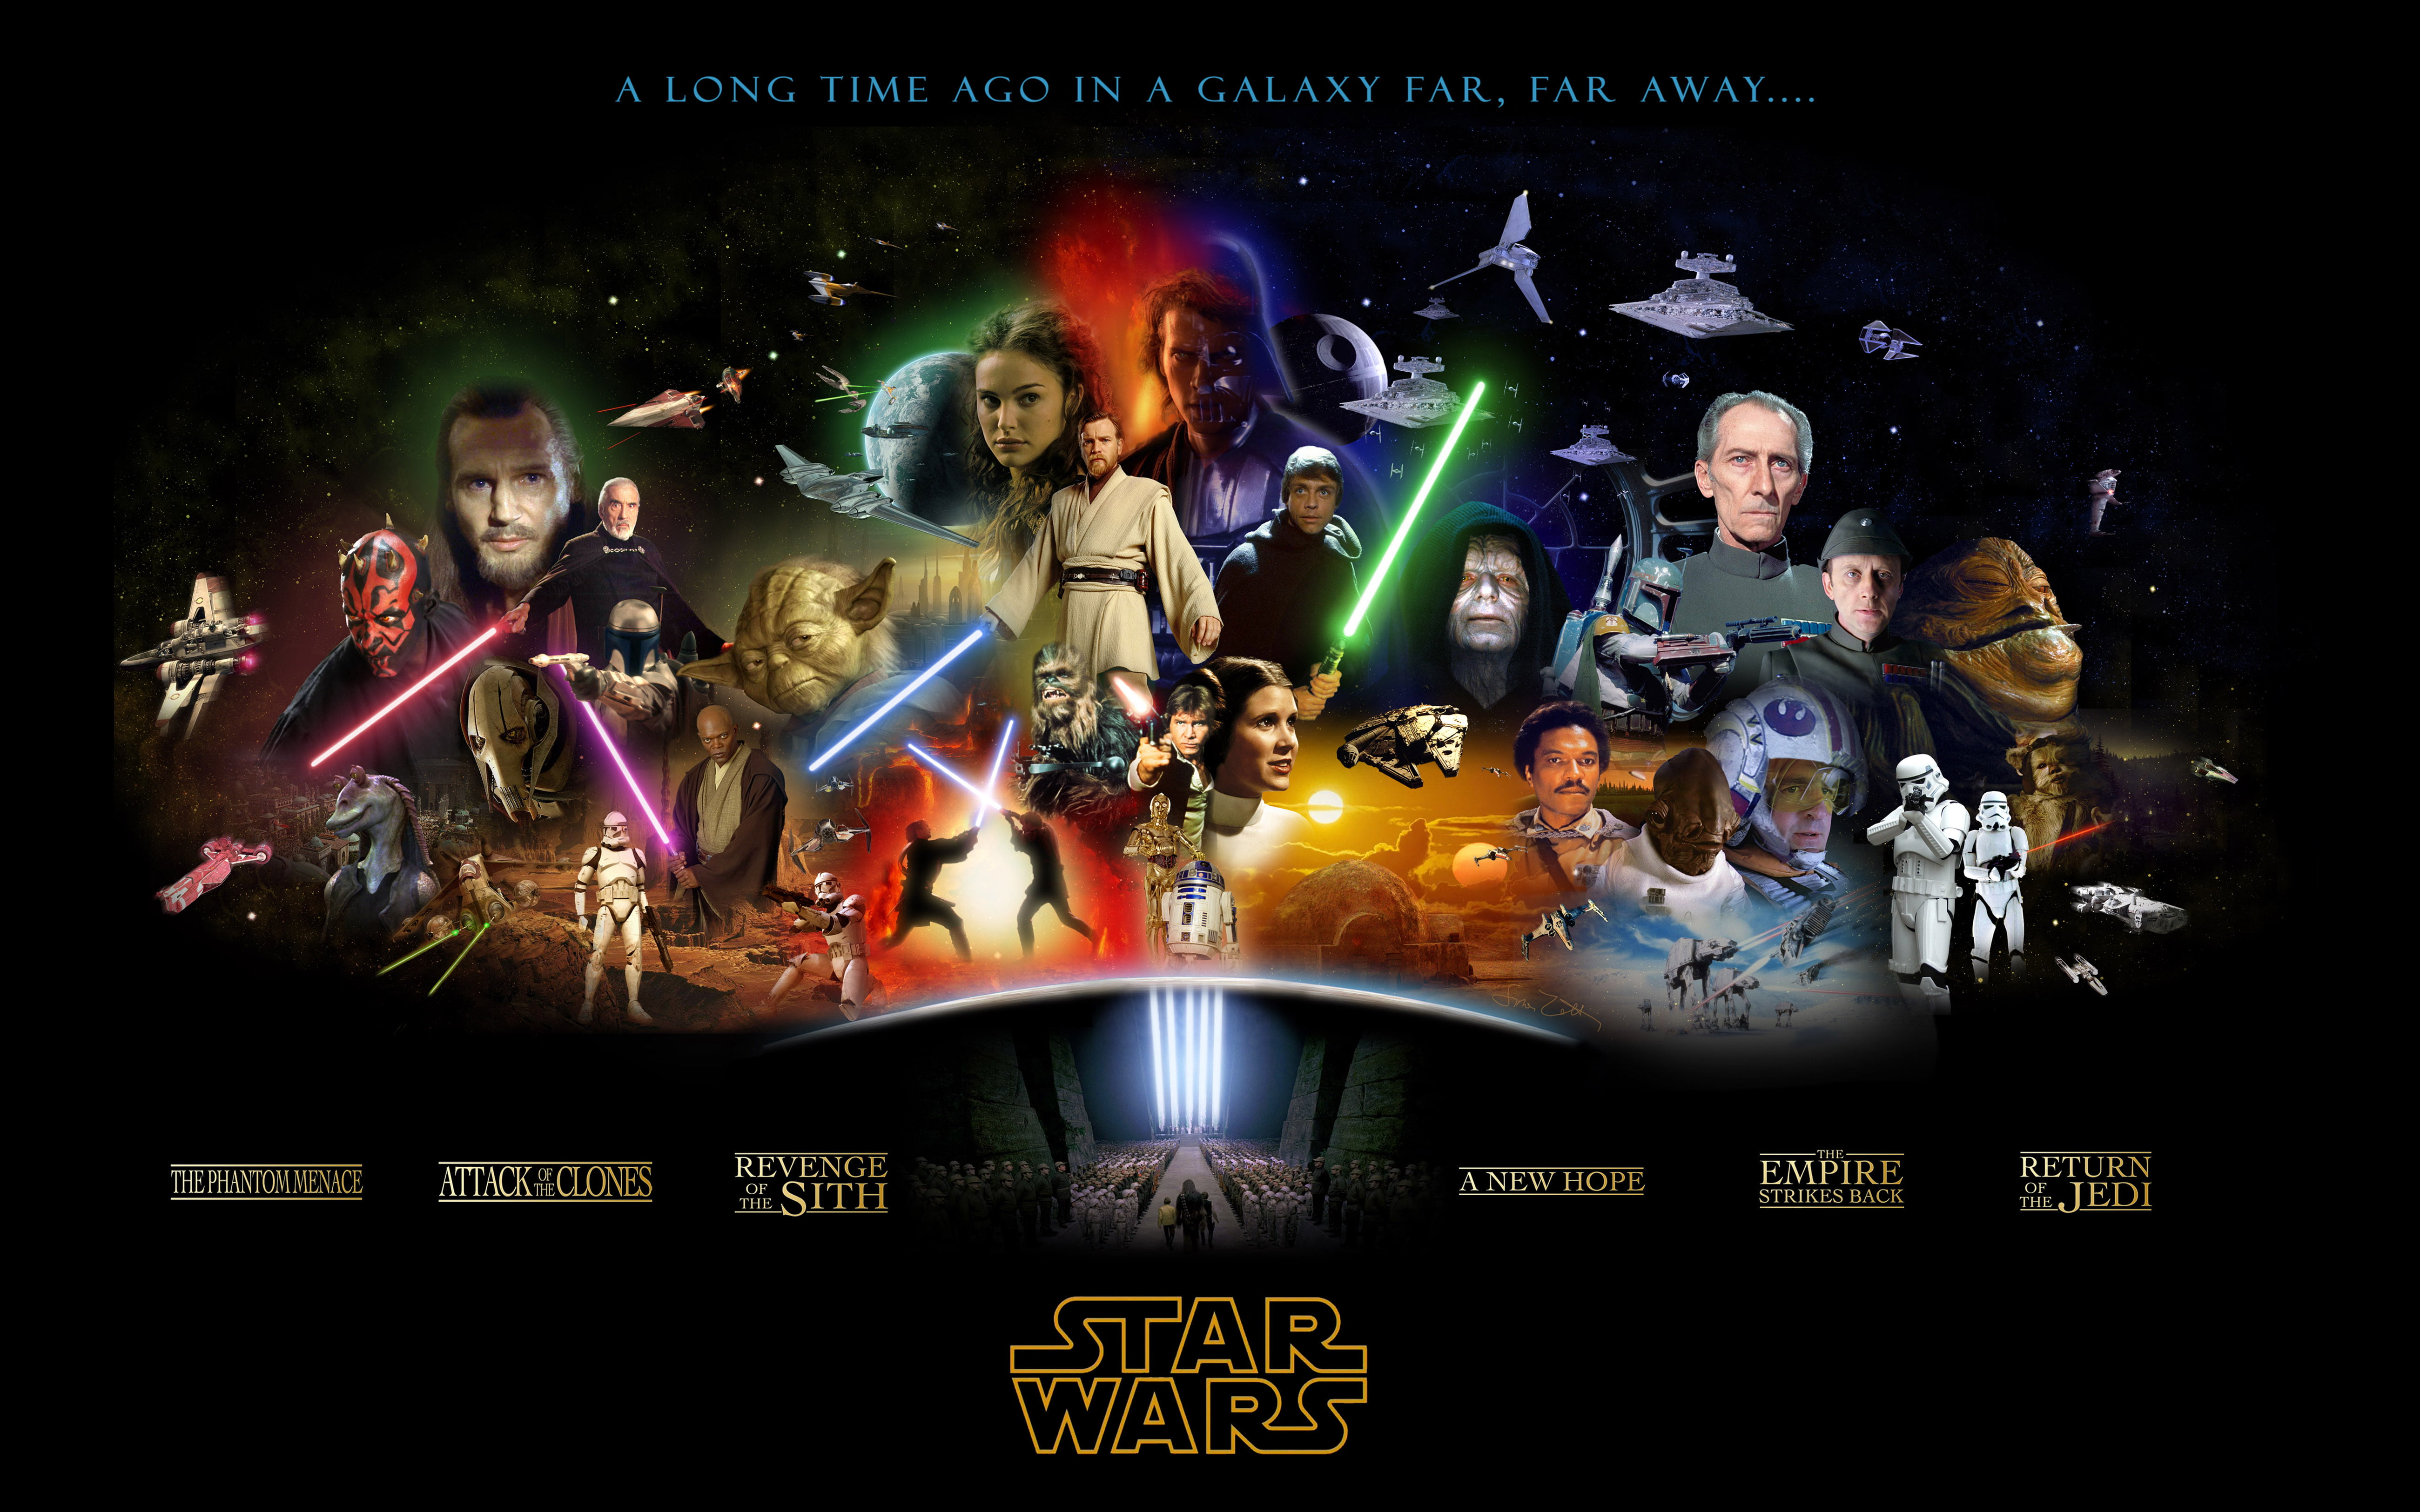 Star Wars All Episodes Desktop Wallpaper Free Download, group of people